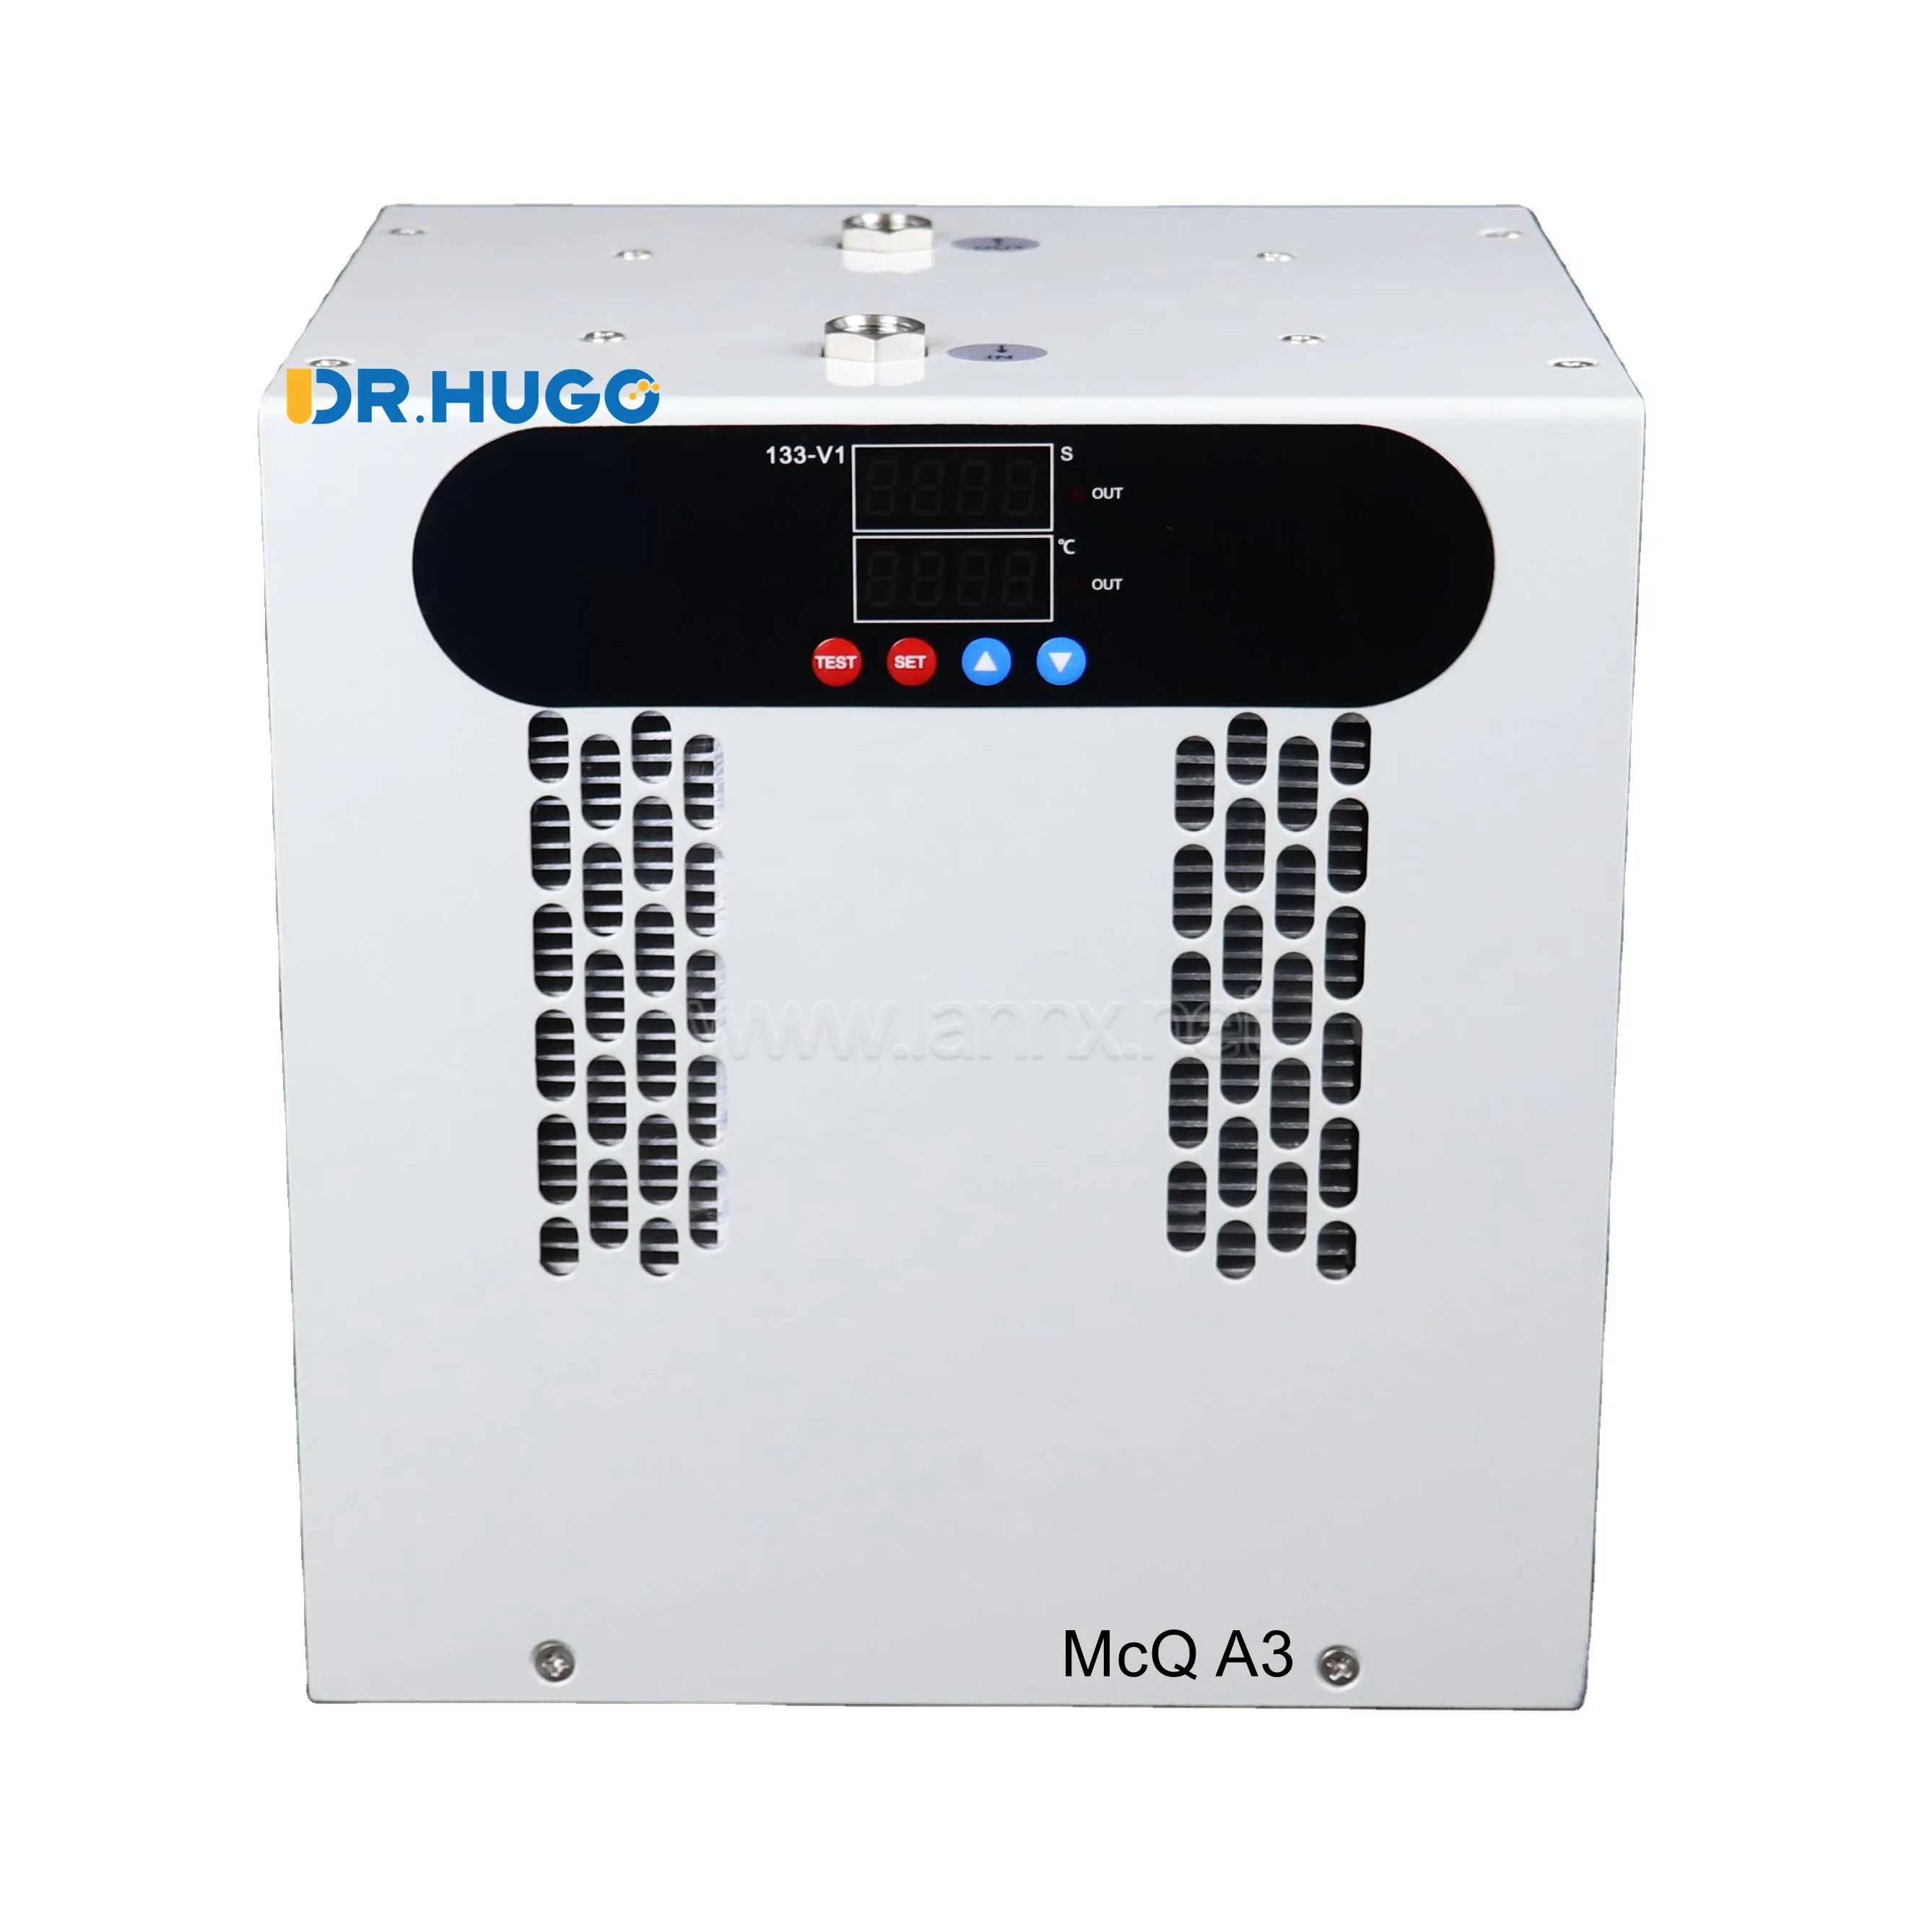 DR. הוגו McQ A3 מקצועי מיני אוויר קריר עבור בריאות אספקת חמצן בלחץ גבוה תאי טיפול תא אוויר קריר